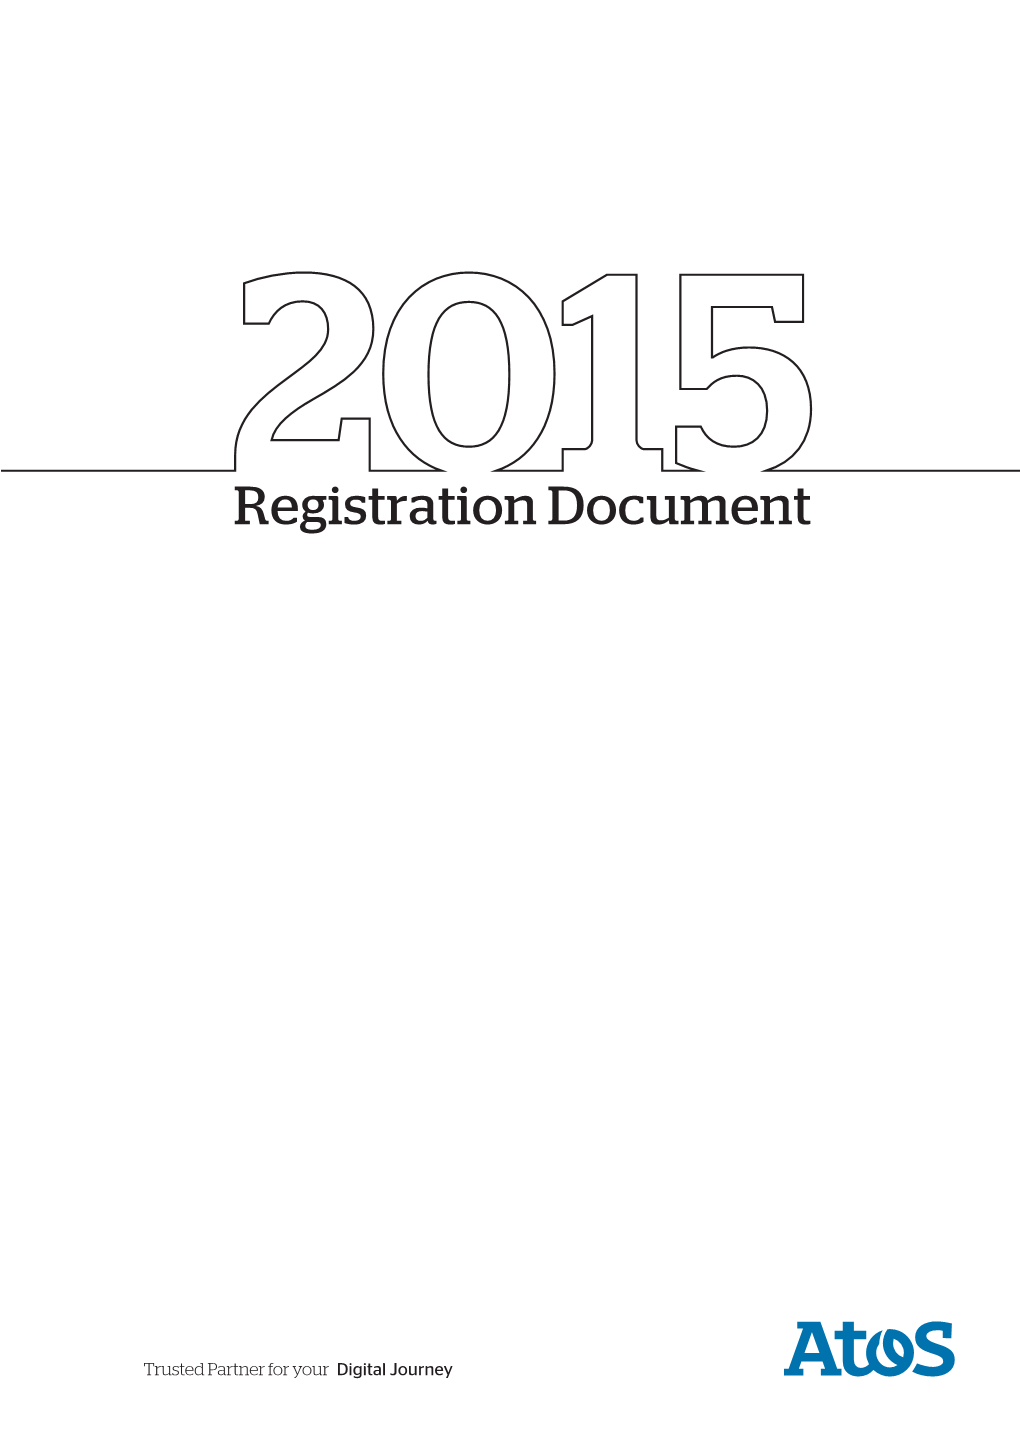 Registration Document 2015 1 Trusted Partner for Your Digital Journey 2 A